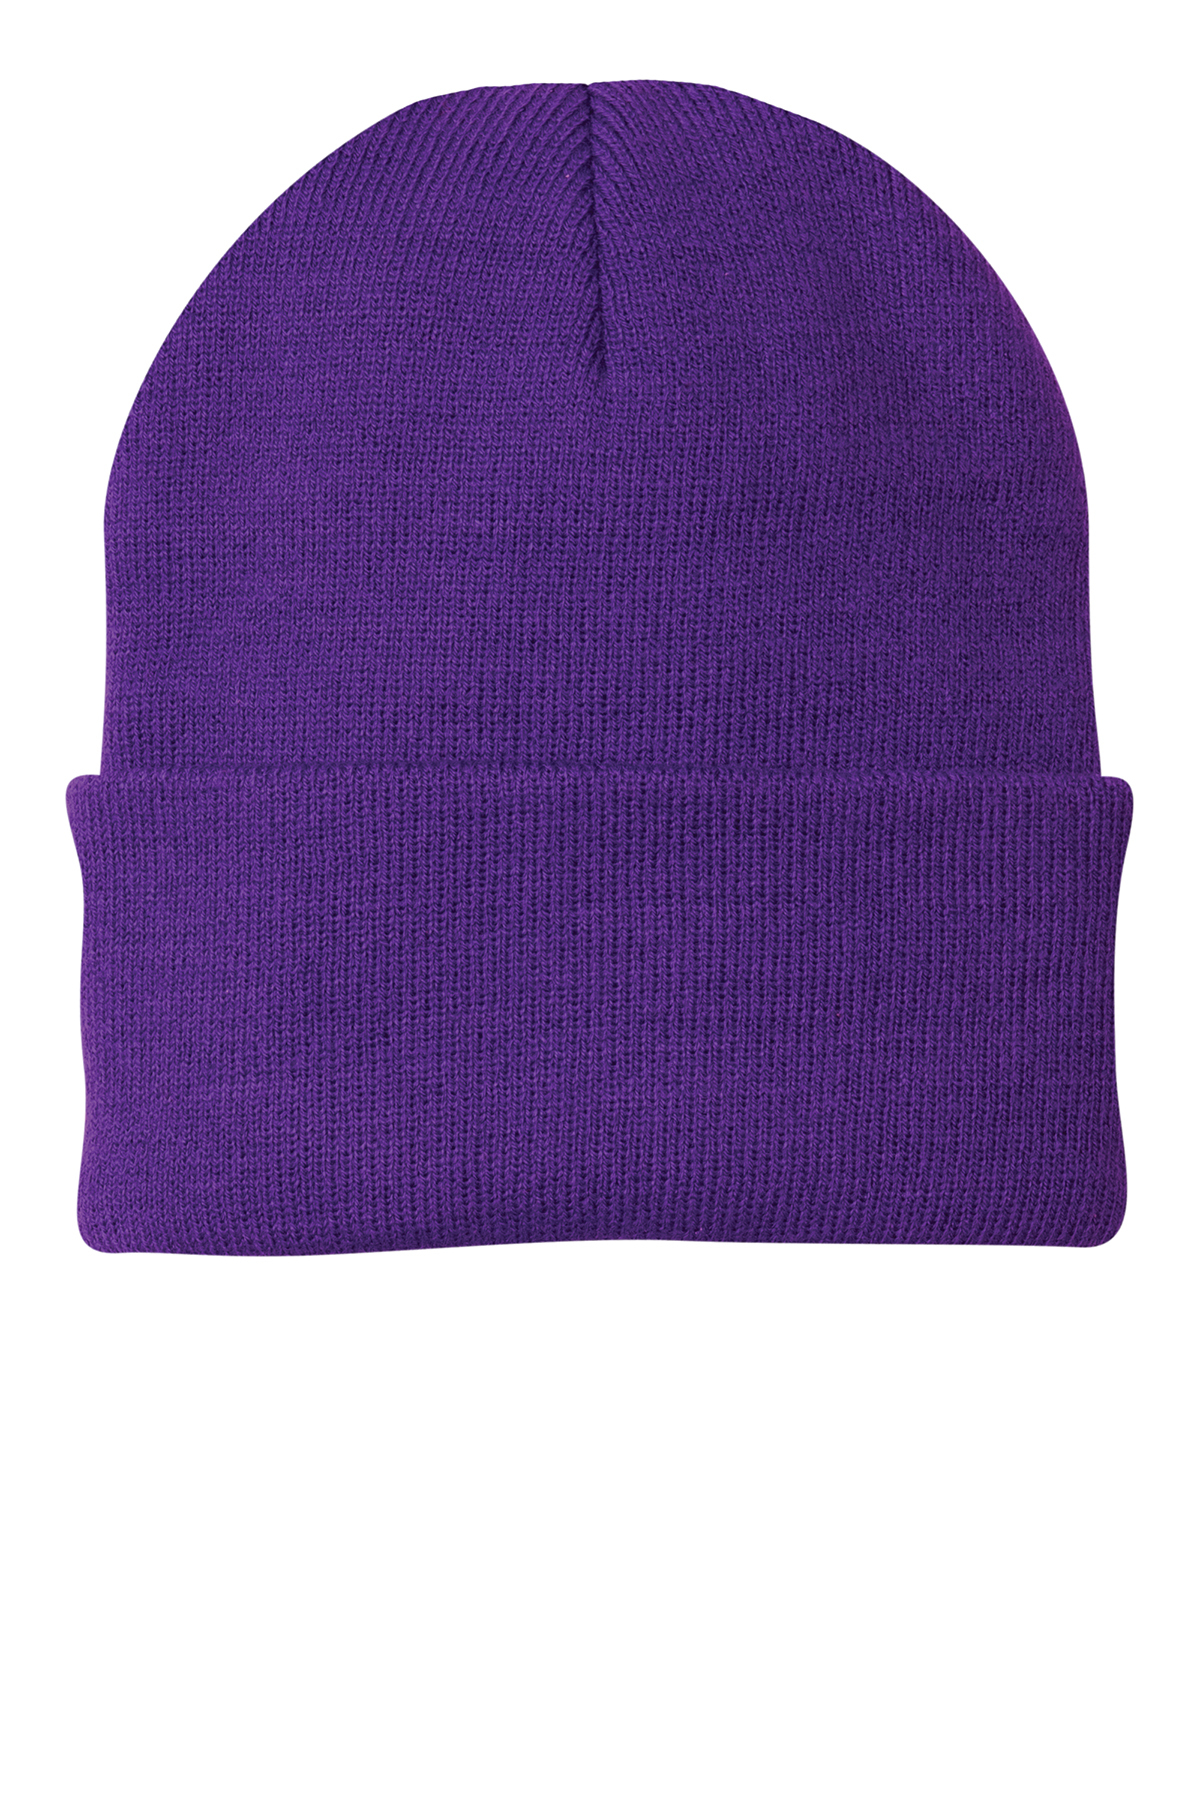 Port & Company - Knit Cap | Product | SanMar